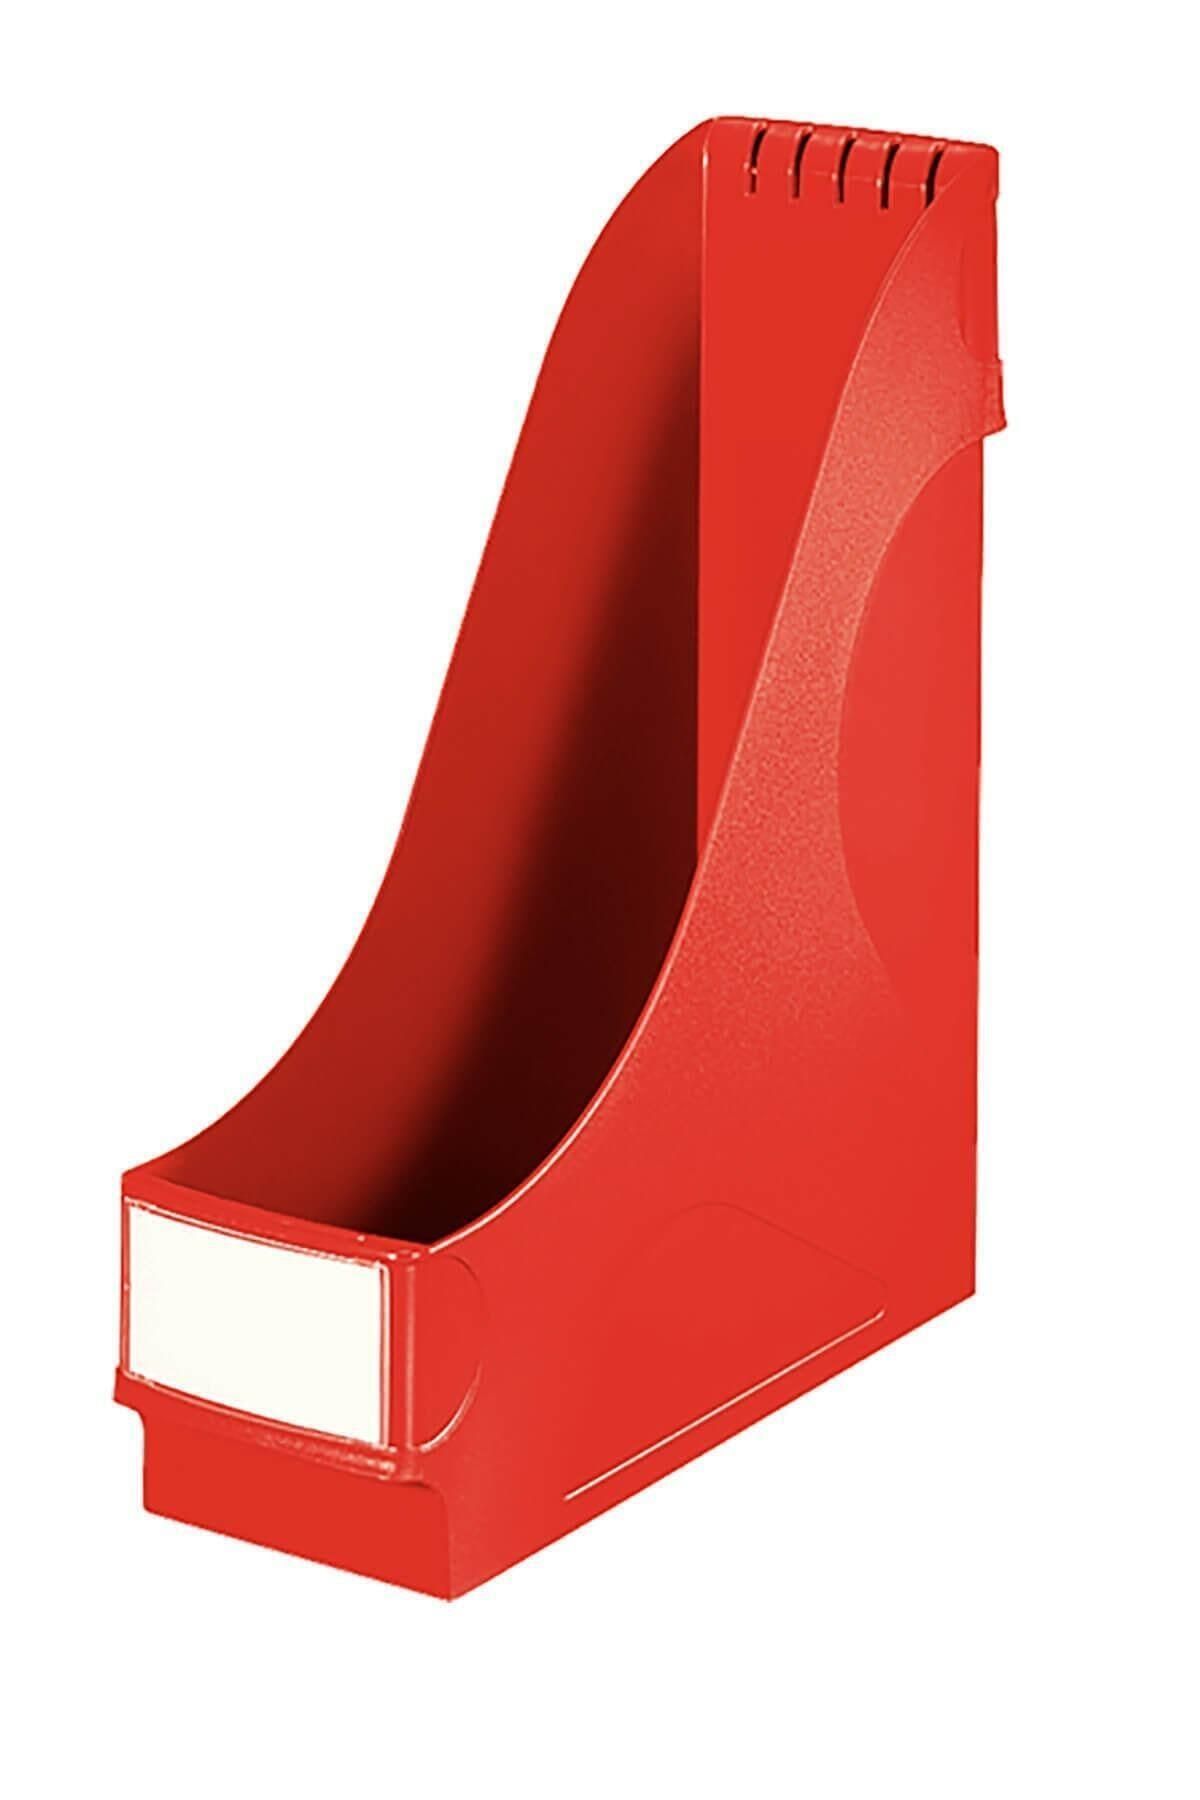 Leitz Kutu Klasör (MAGAZİNLİK) Plastik 9.8x31.8x29.1 Kırmızı 2425t